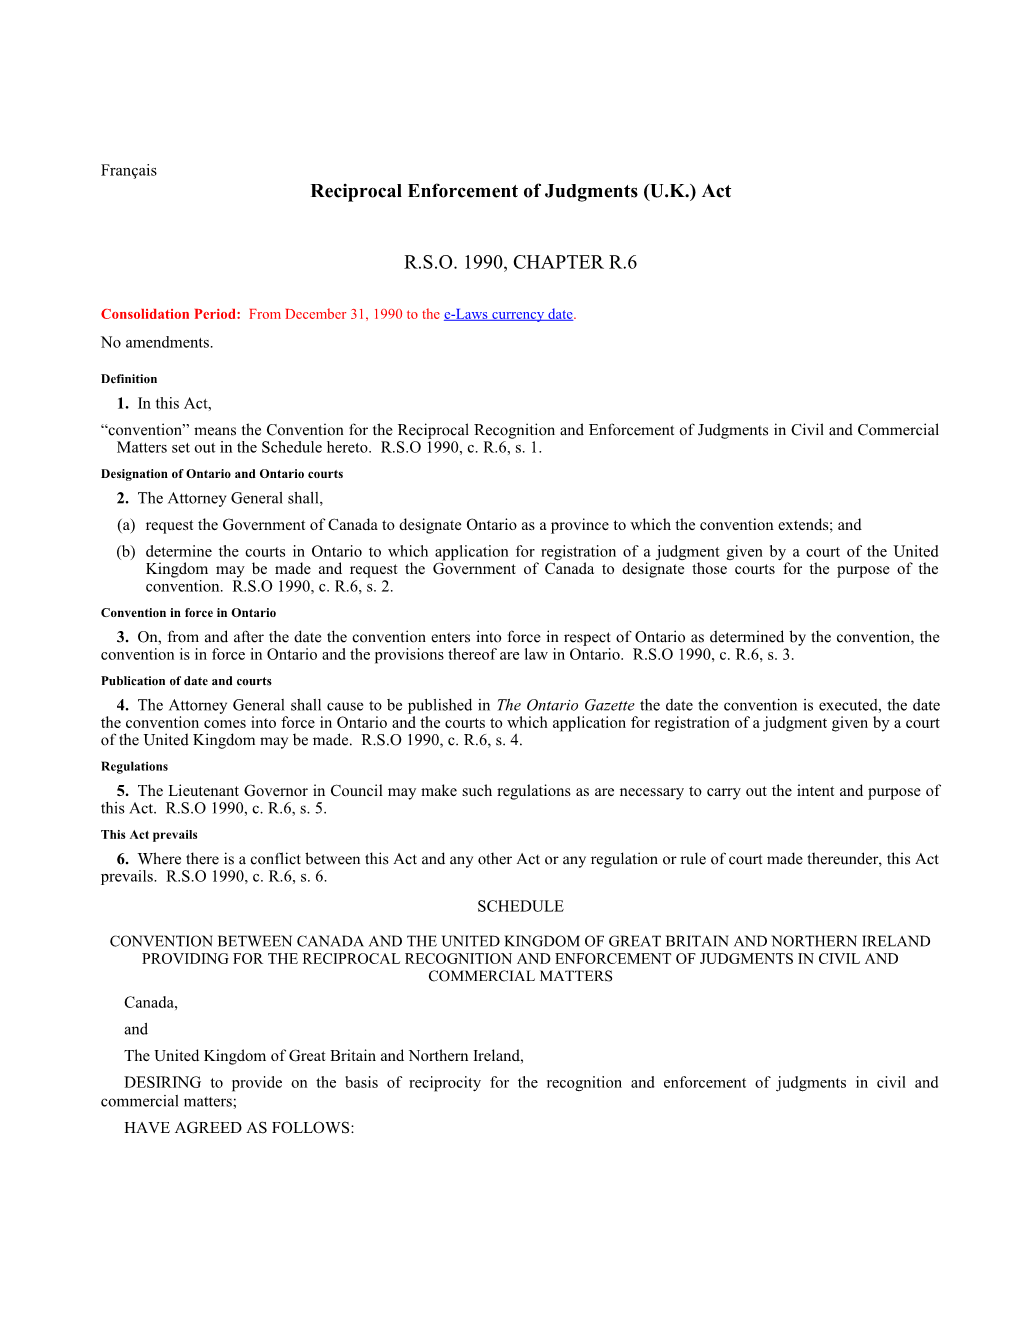 Reciprocal Enforcement of Judgments (U.K.) Act, R.S.O. 1990, C. R.6